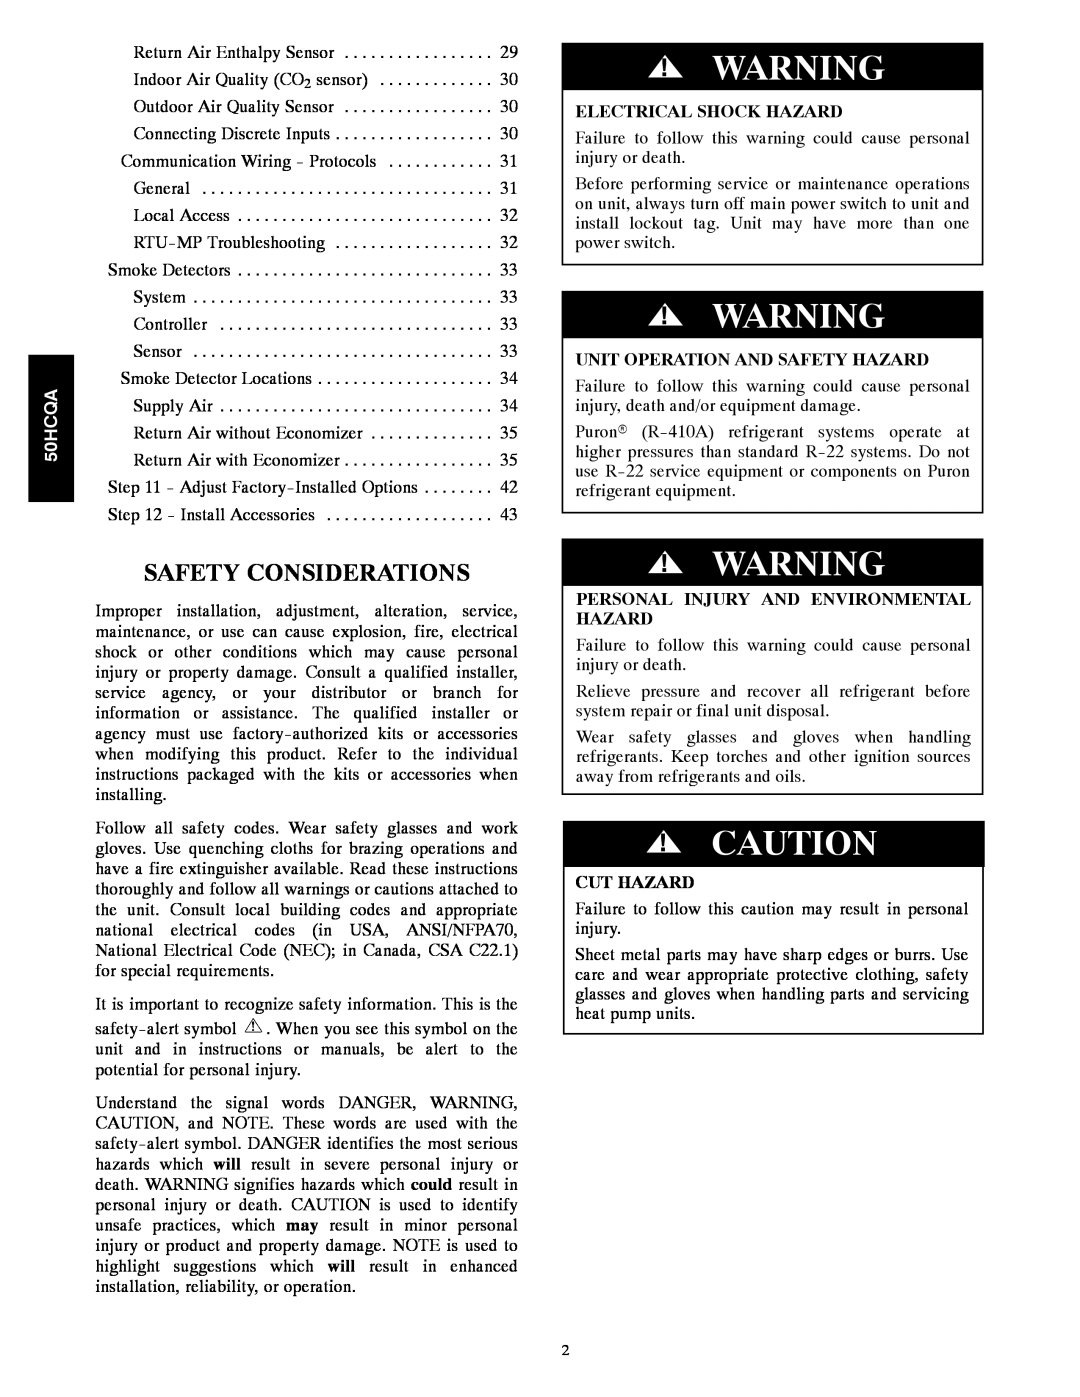 Carrier 50HCQA Safety Considerations, Electrical Shock Hazard, Unit Operation And Safety Hazard, Cut Hazard 